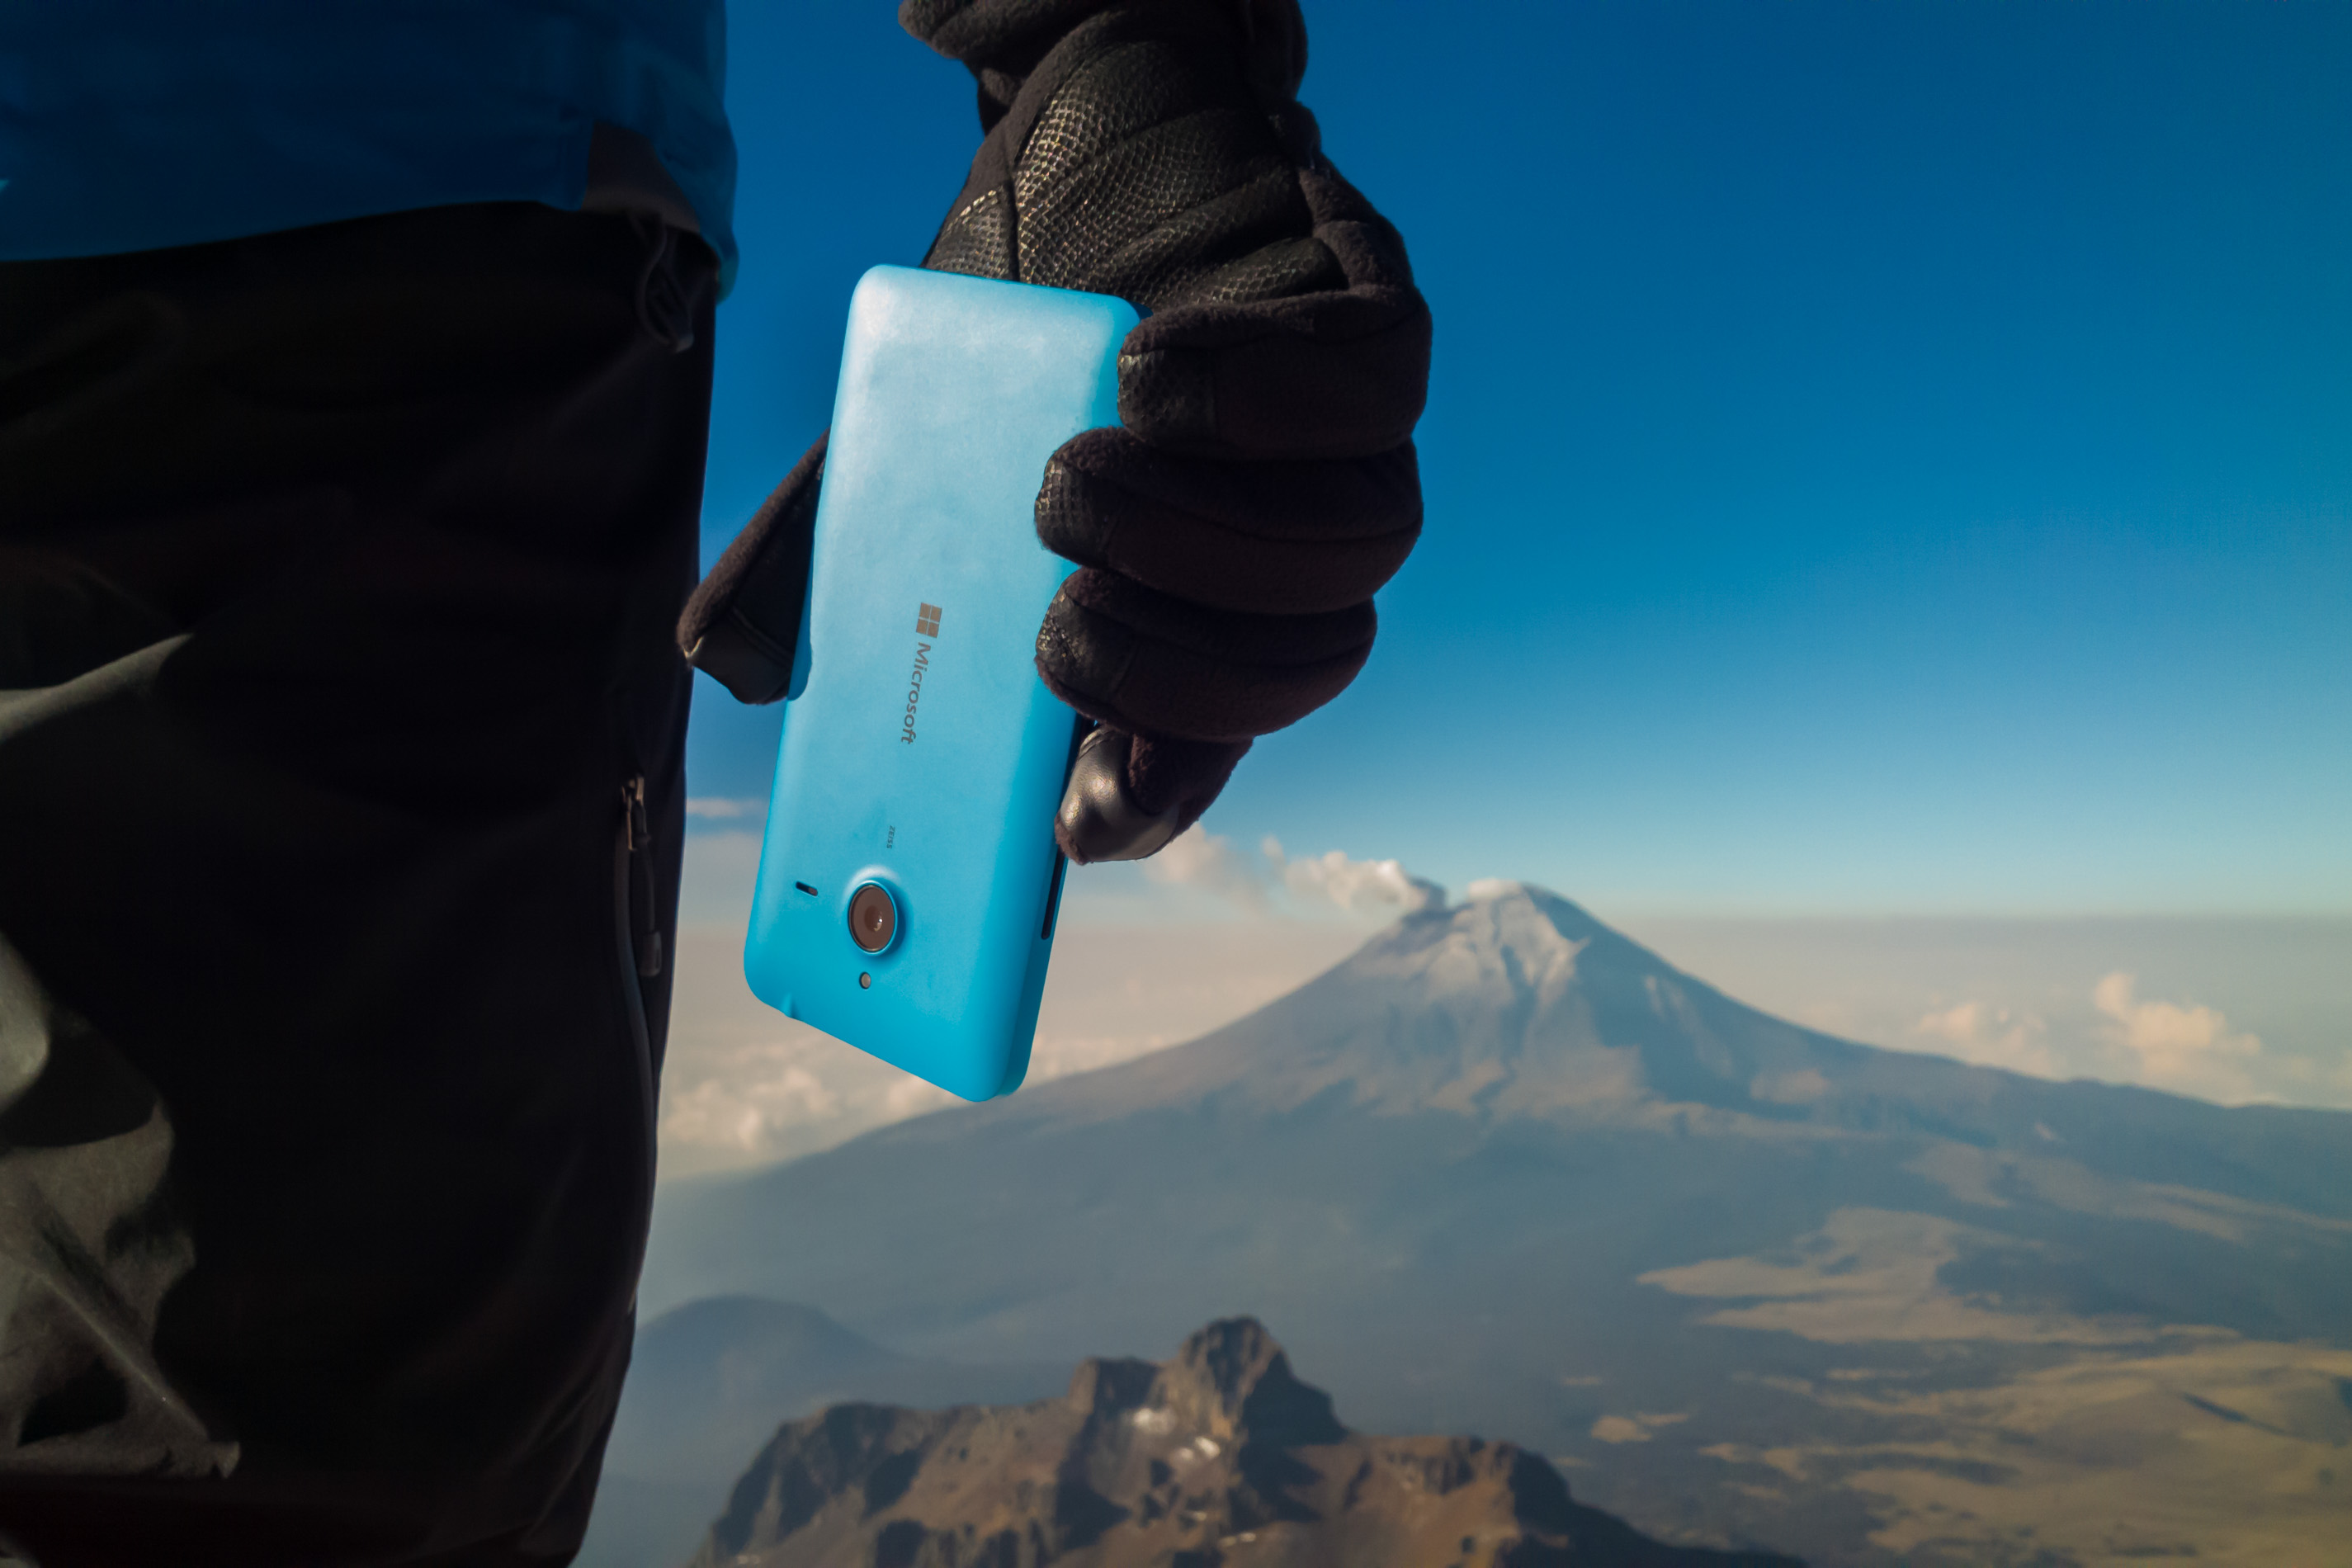 Microsoft / Lumia Smartphones / Seven Natural Wonders/ Paricutin, Mexico